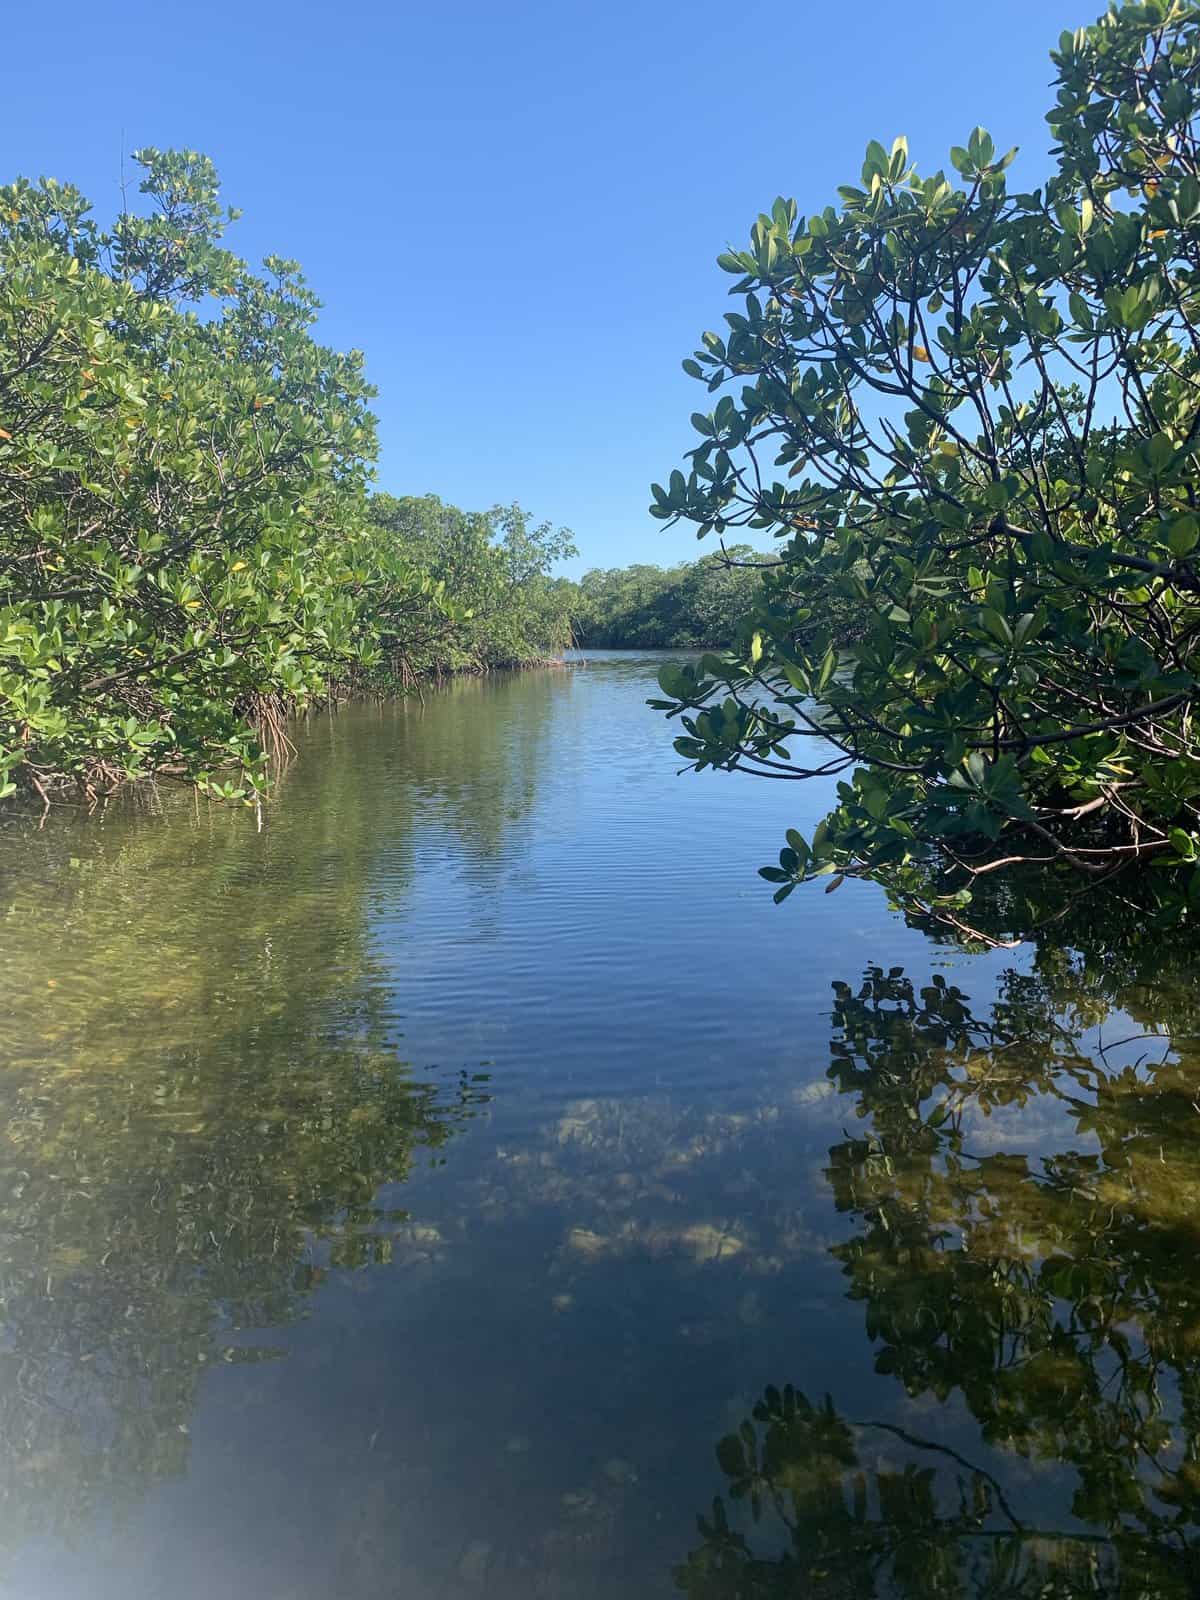 Shark Creek with mangrove